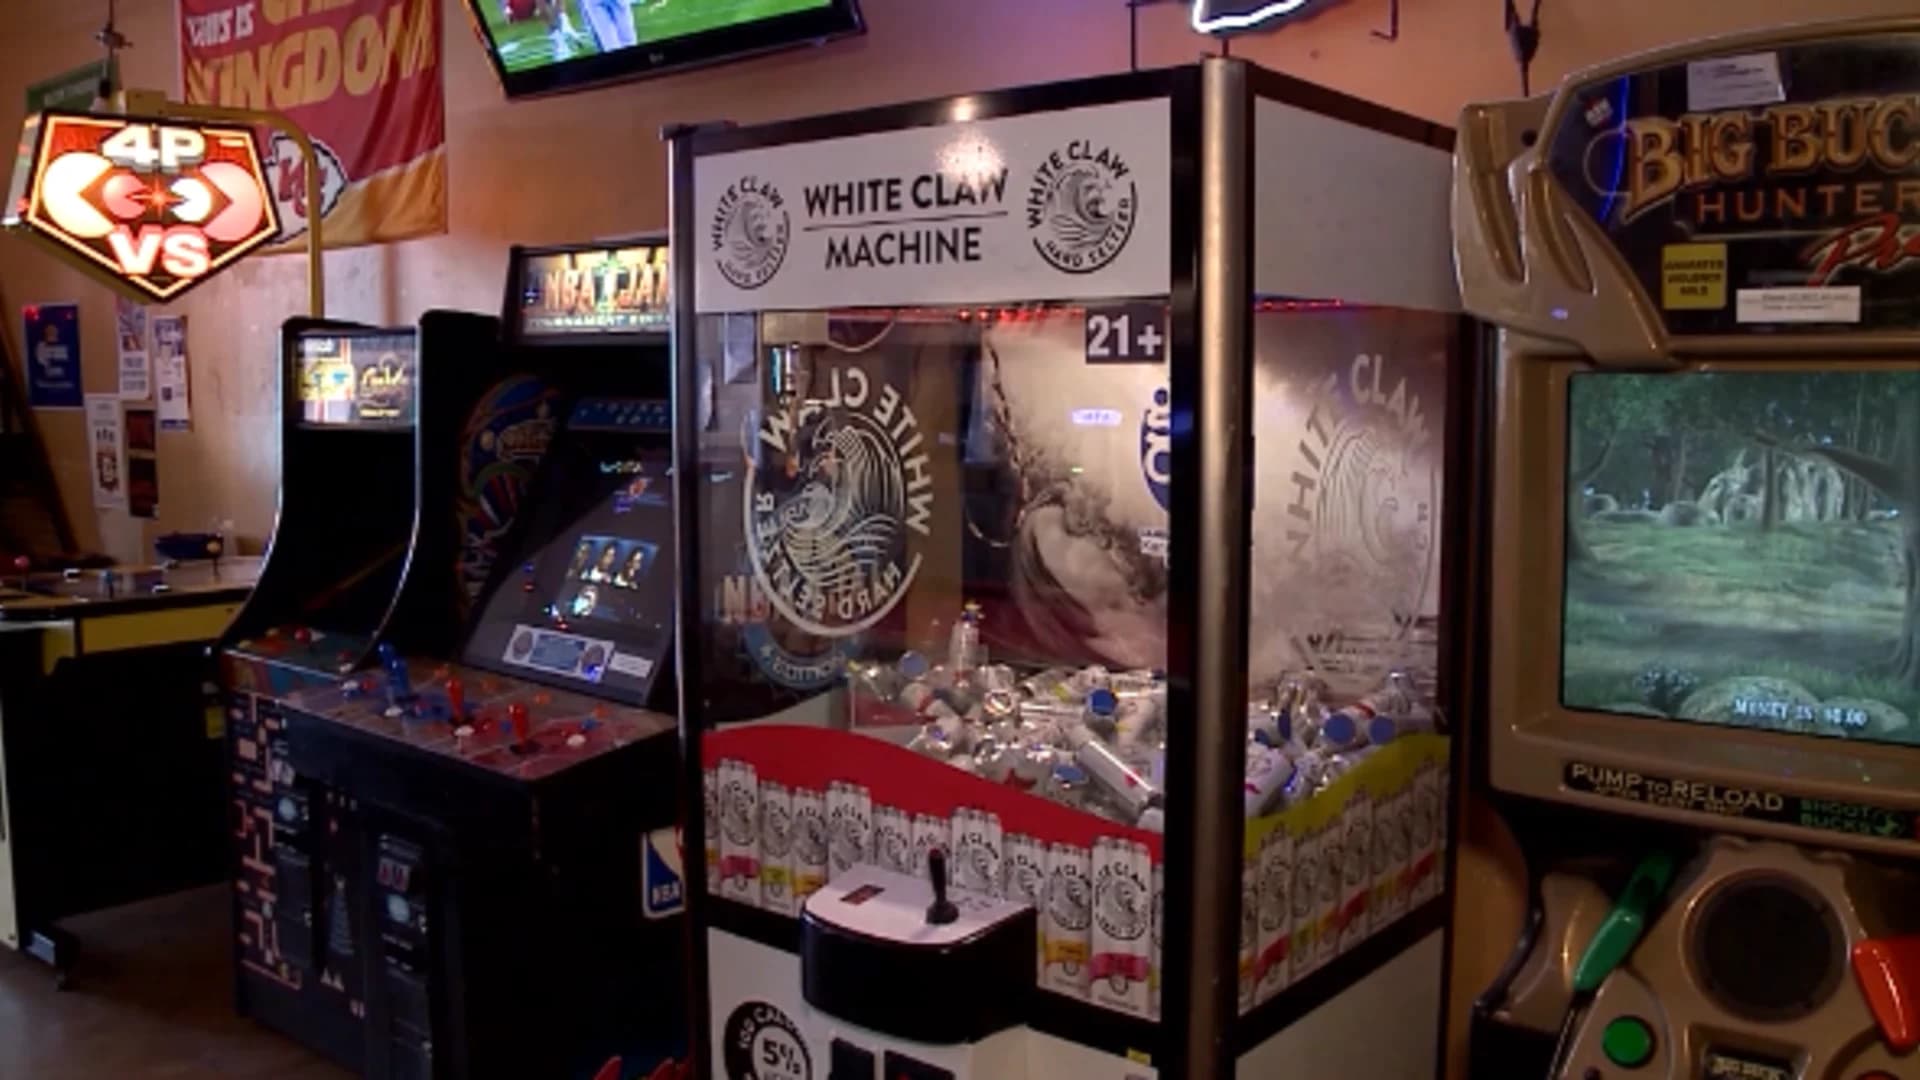 Bar unveils claw machine filled with popular White Claw beverage